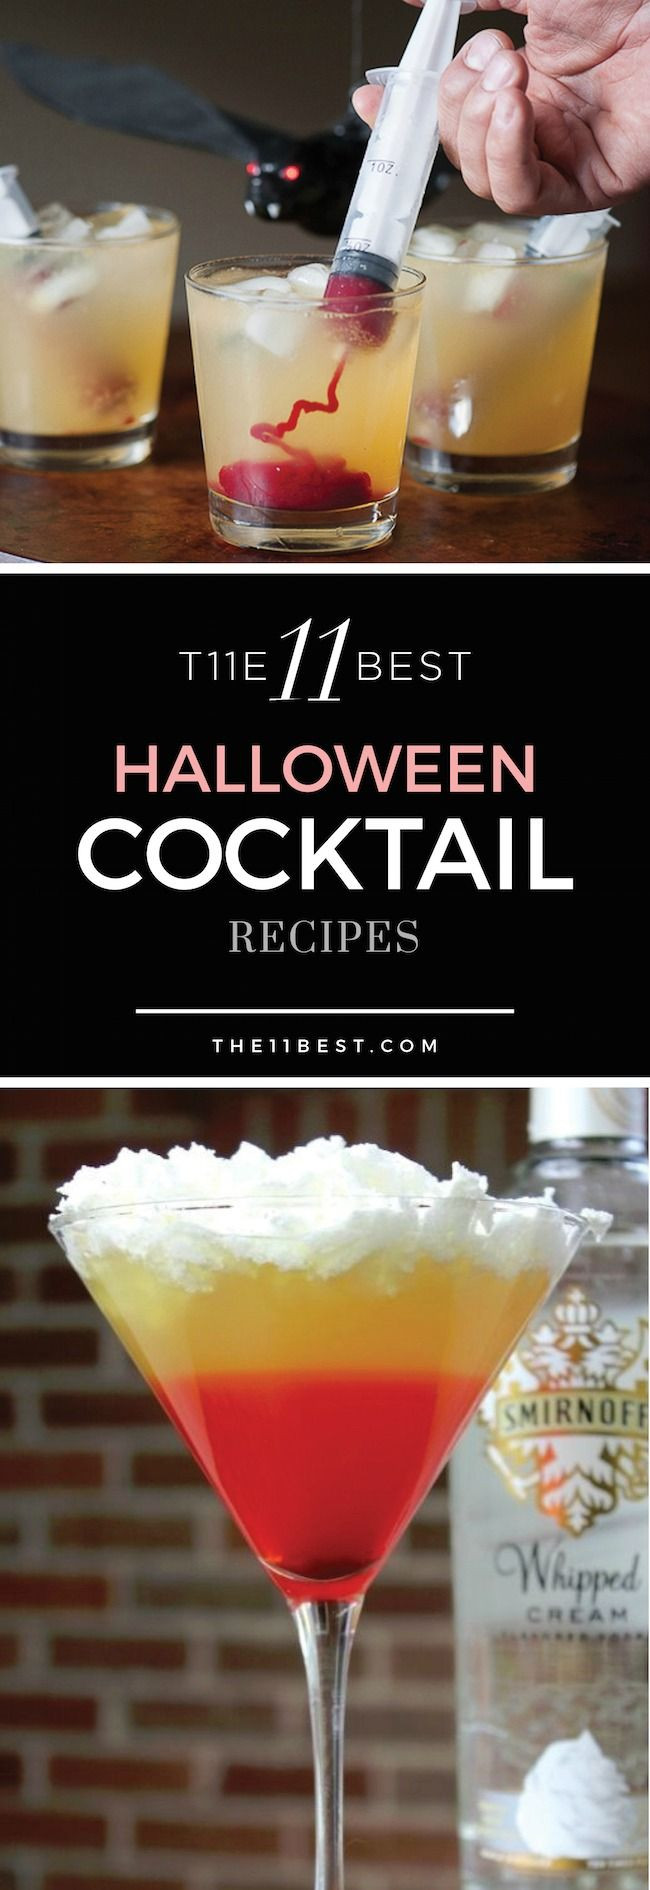 Best Halloween Drinks
 The 11 Best Halloween Cocktail Recipe Ideas